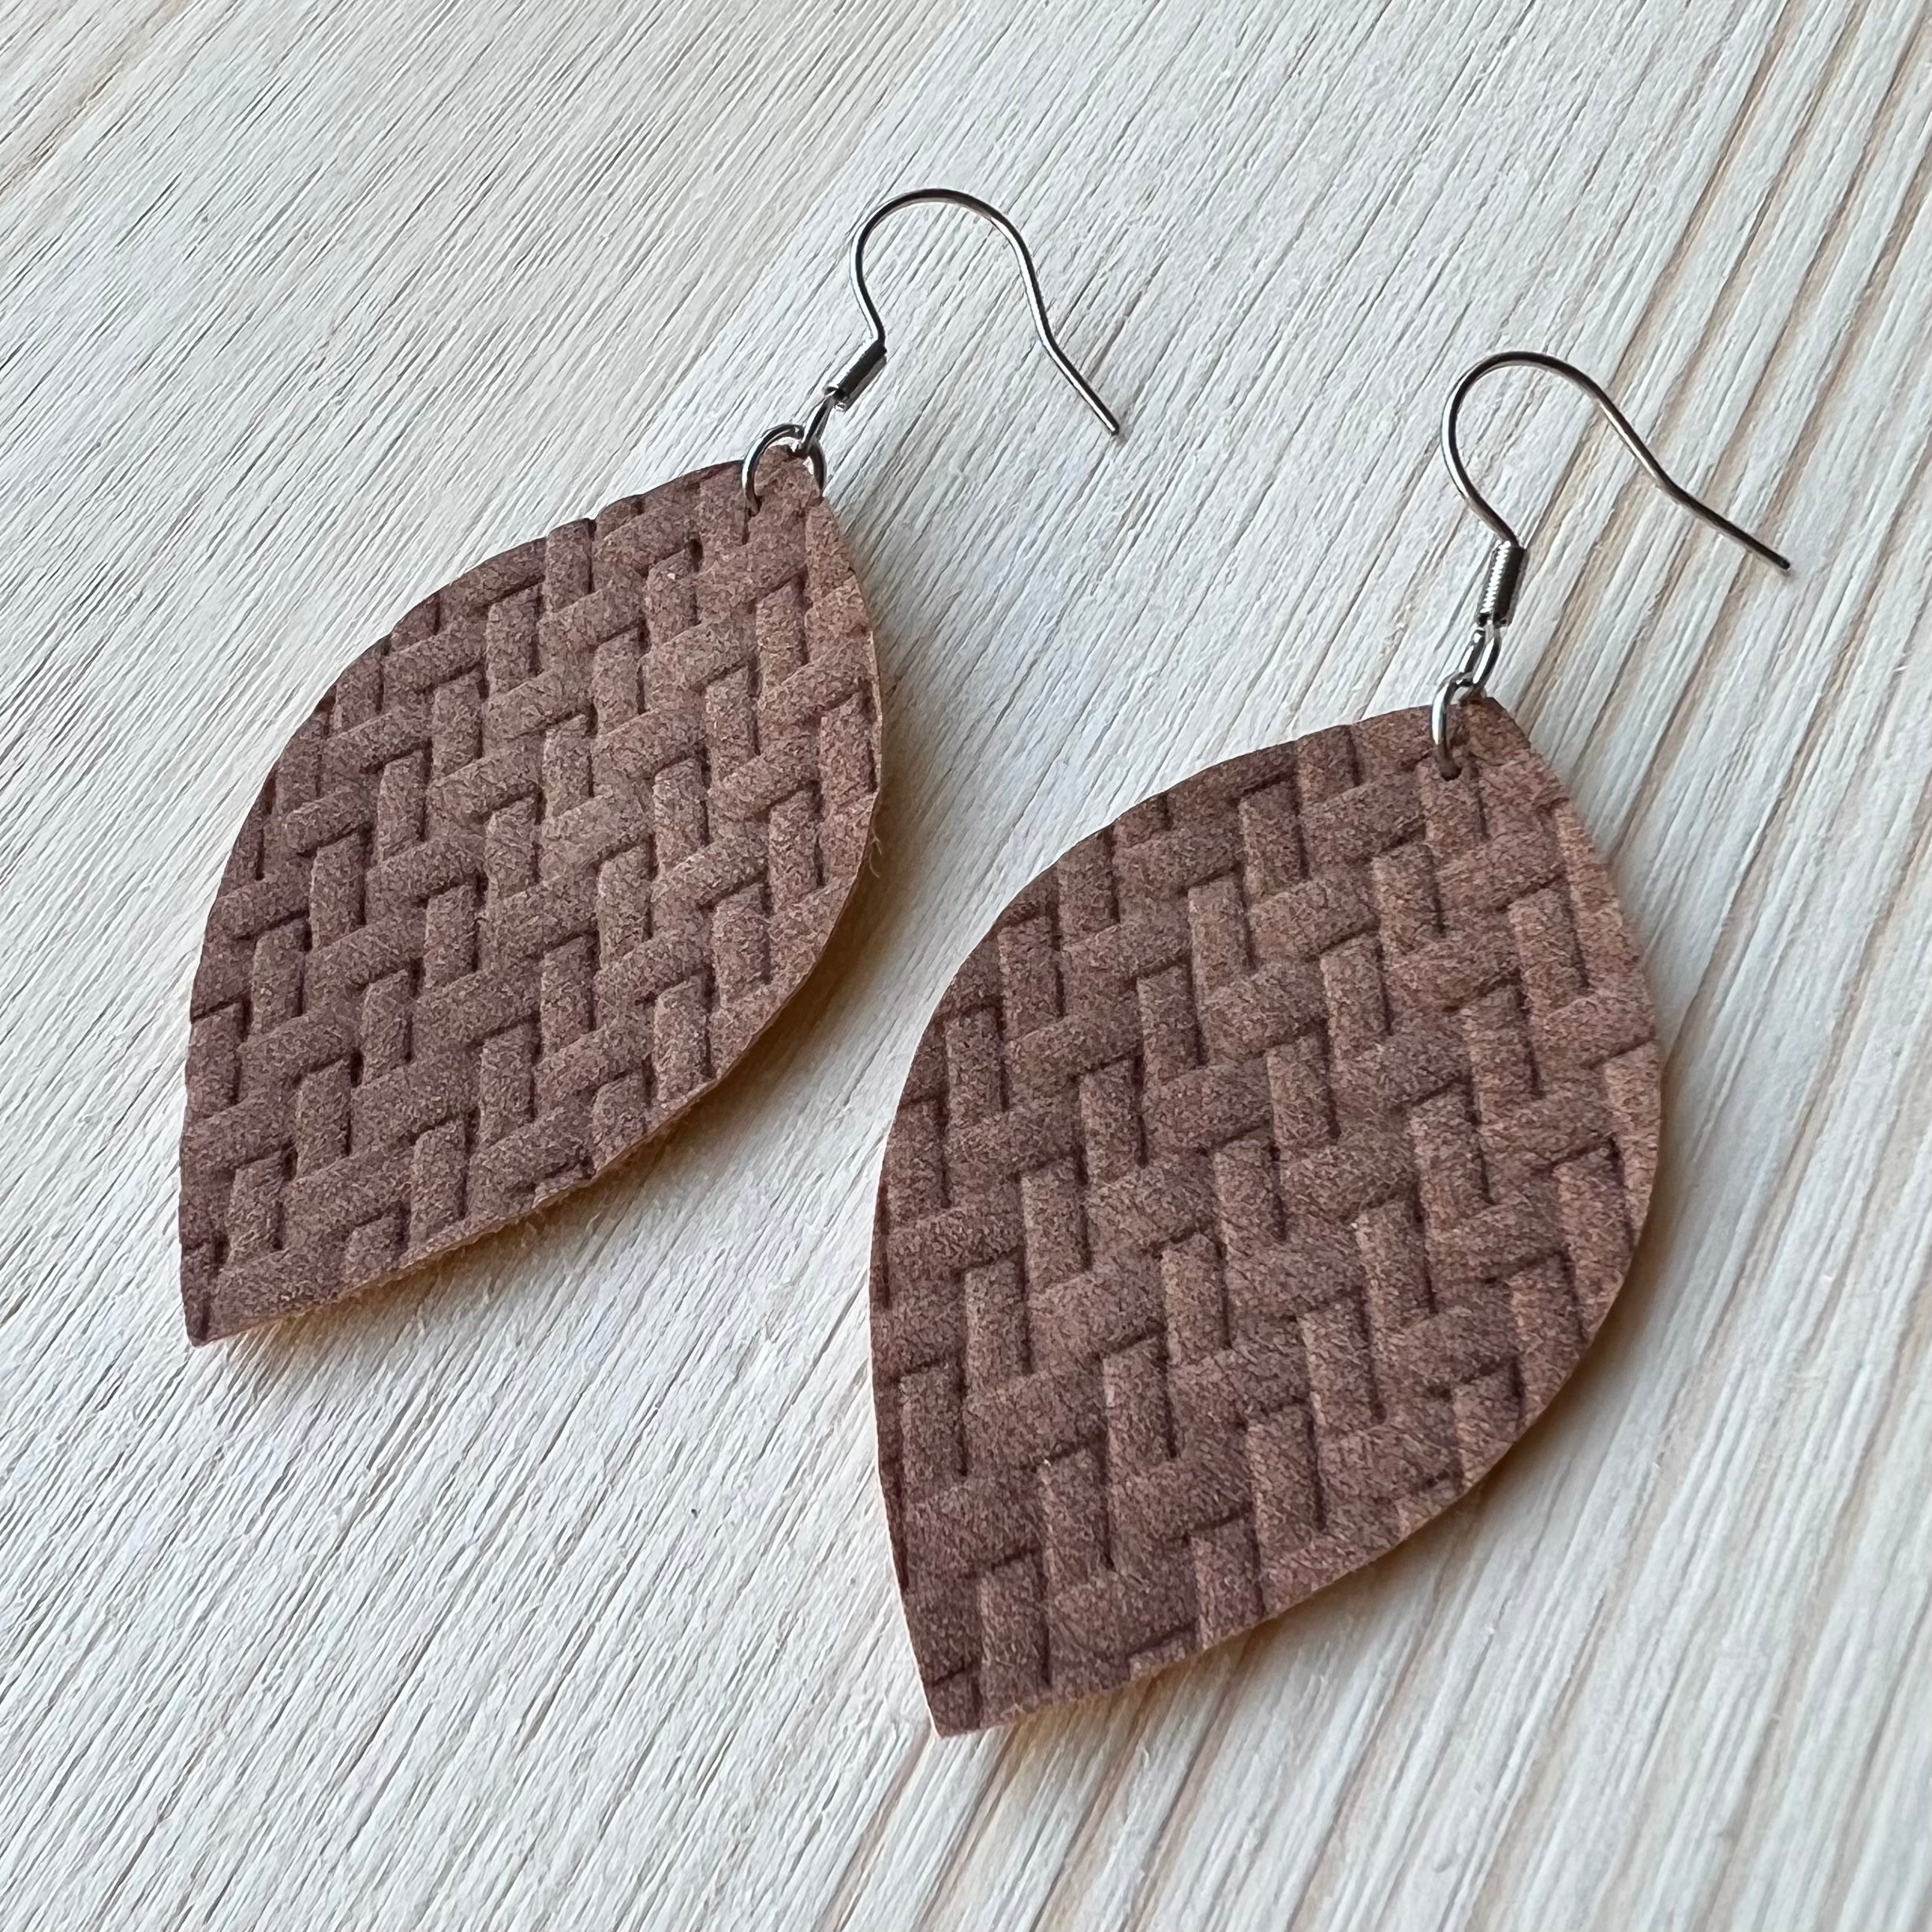 Leaf Earrings - Cocoa Suede Weave